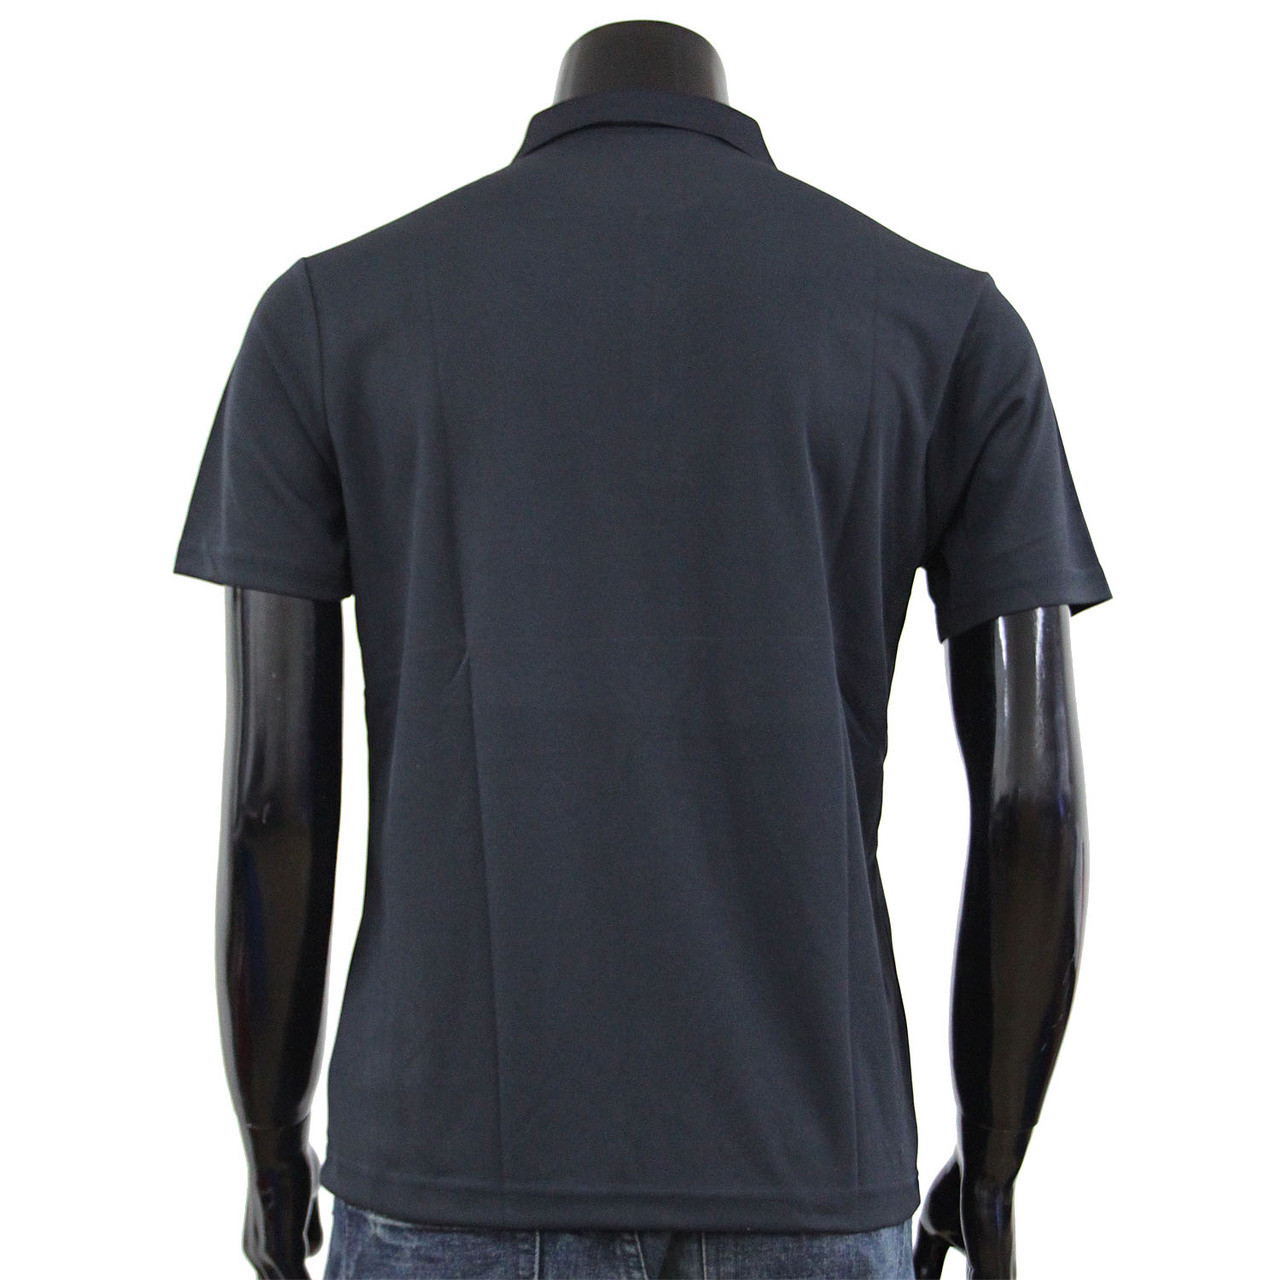 Coolon Polo t-shirt, short sleeve t-shirt, black t-shirt polo shirt ...